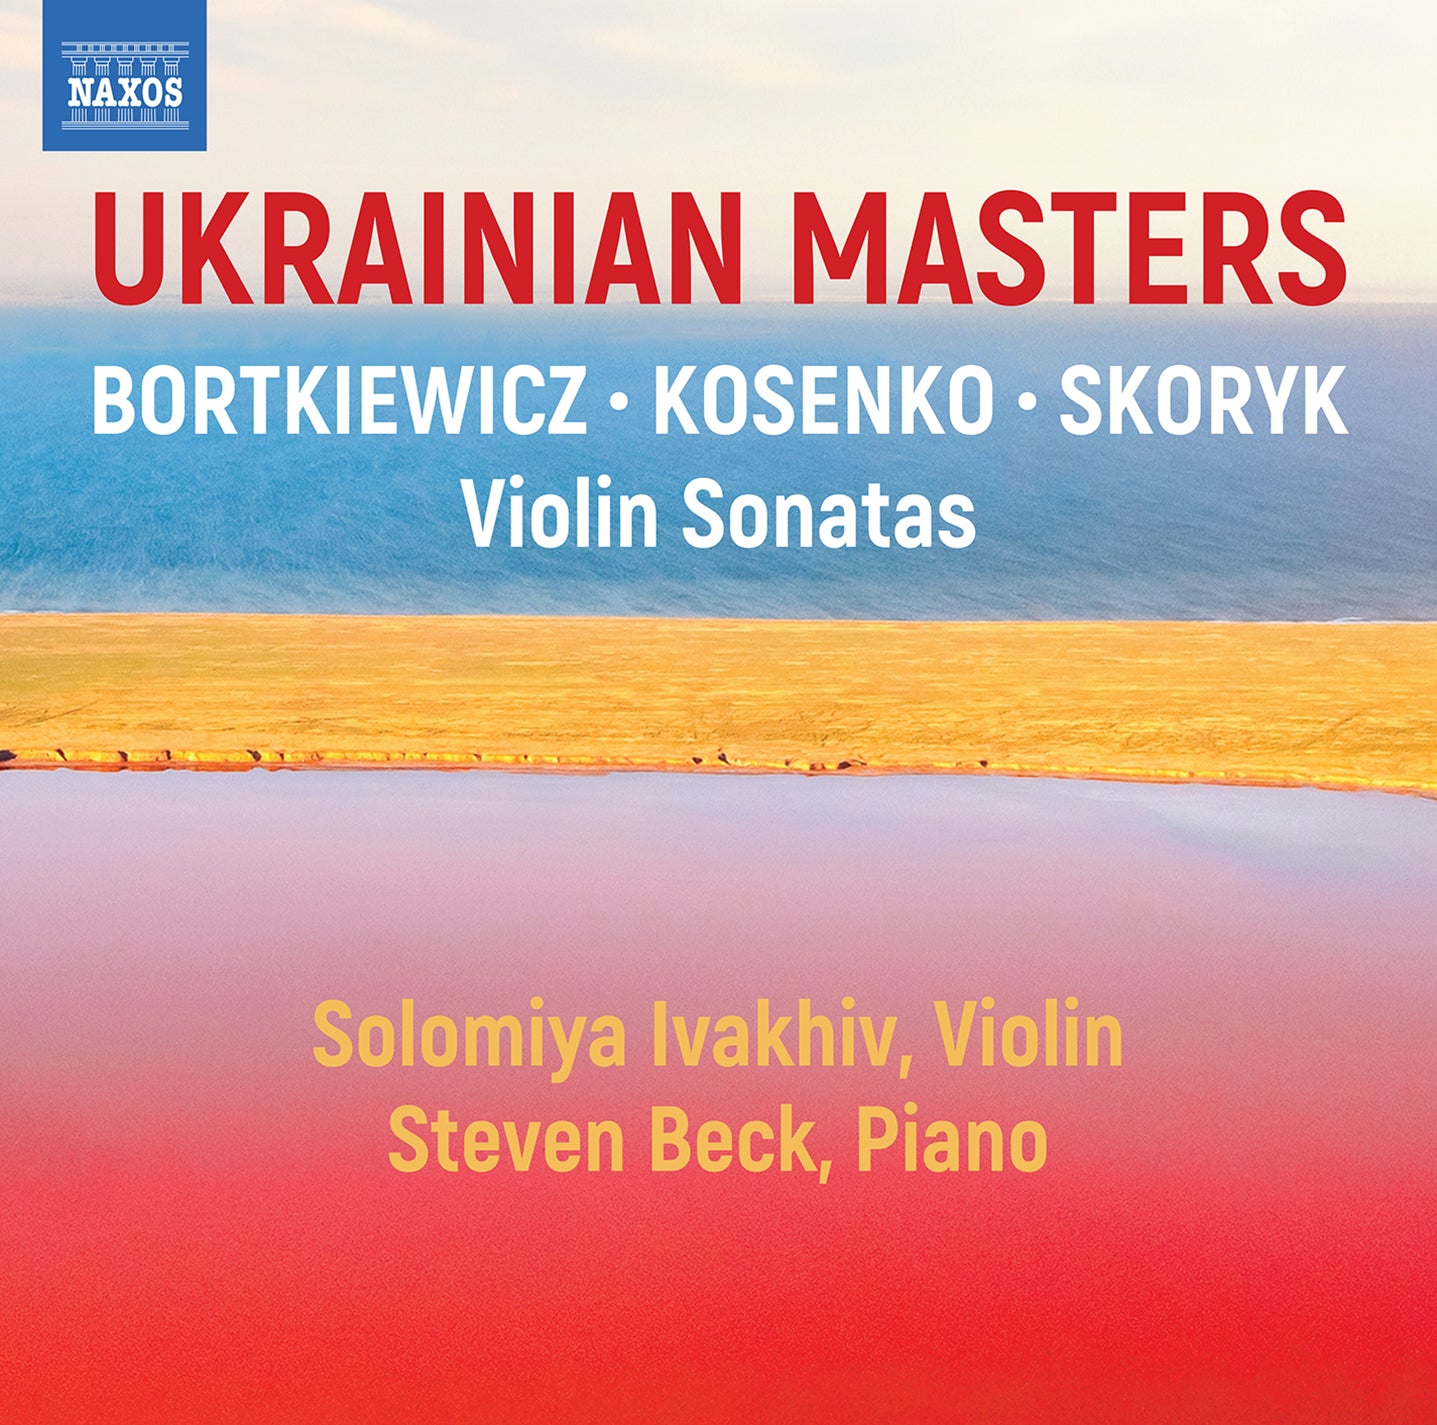 Ukranian Masters - Bortkiewicz, Kosenko, & Skoryk: Violin Sonatas / Ivakhiv, Beck